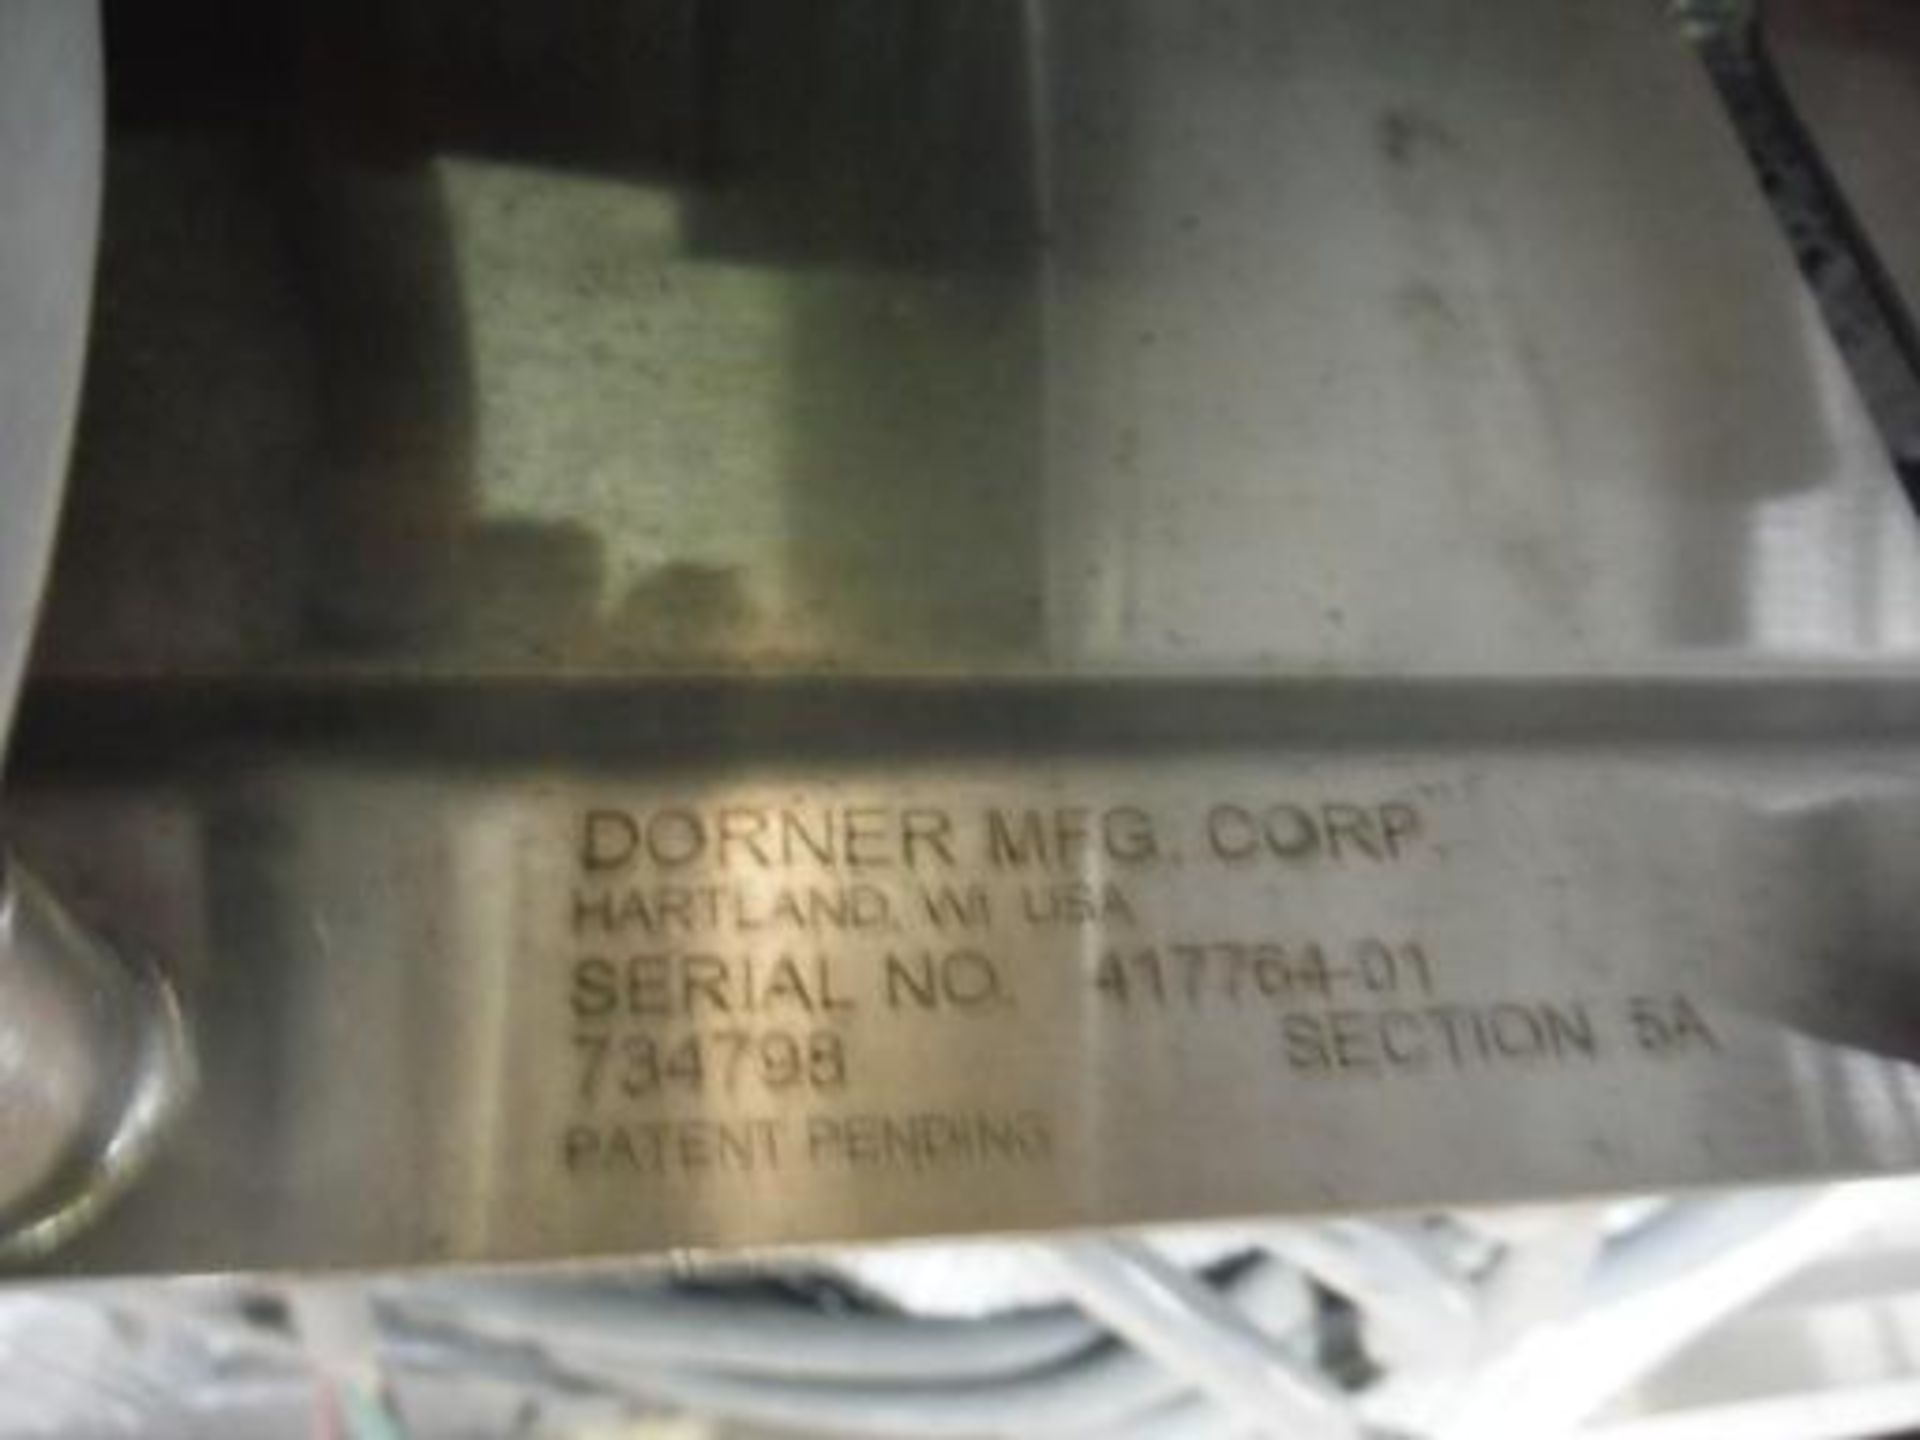 Dorner MFG Corp conveyor, plastic interlock belt, SN 734798, 90 in. long x 18 in. wide, 1.5/1 hp - Image 3 of 3